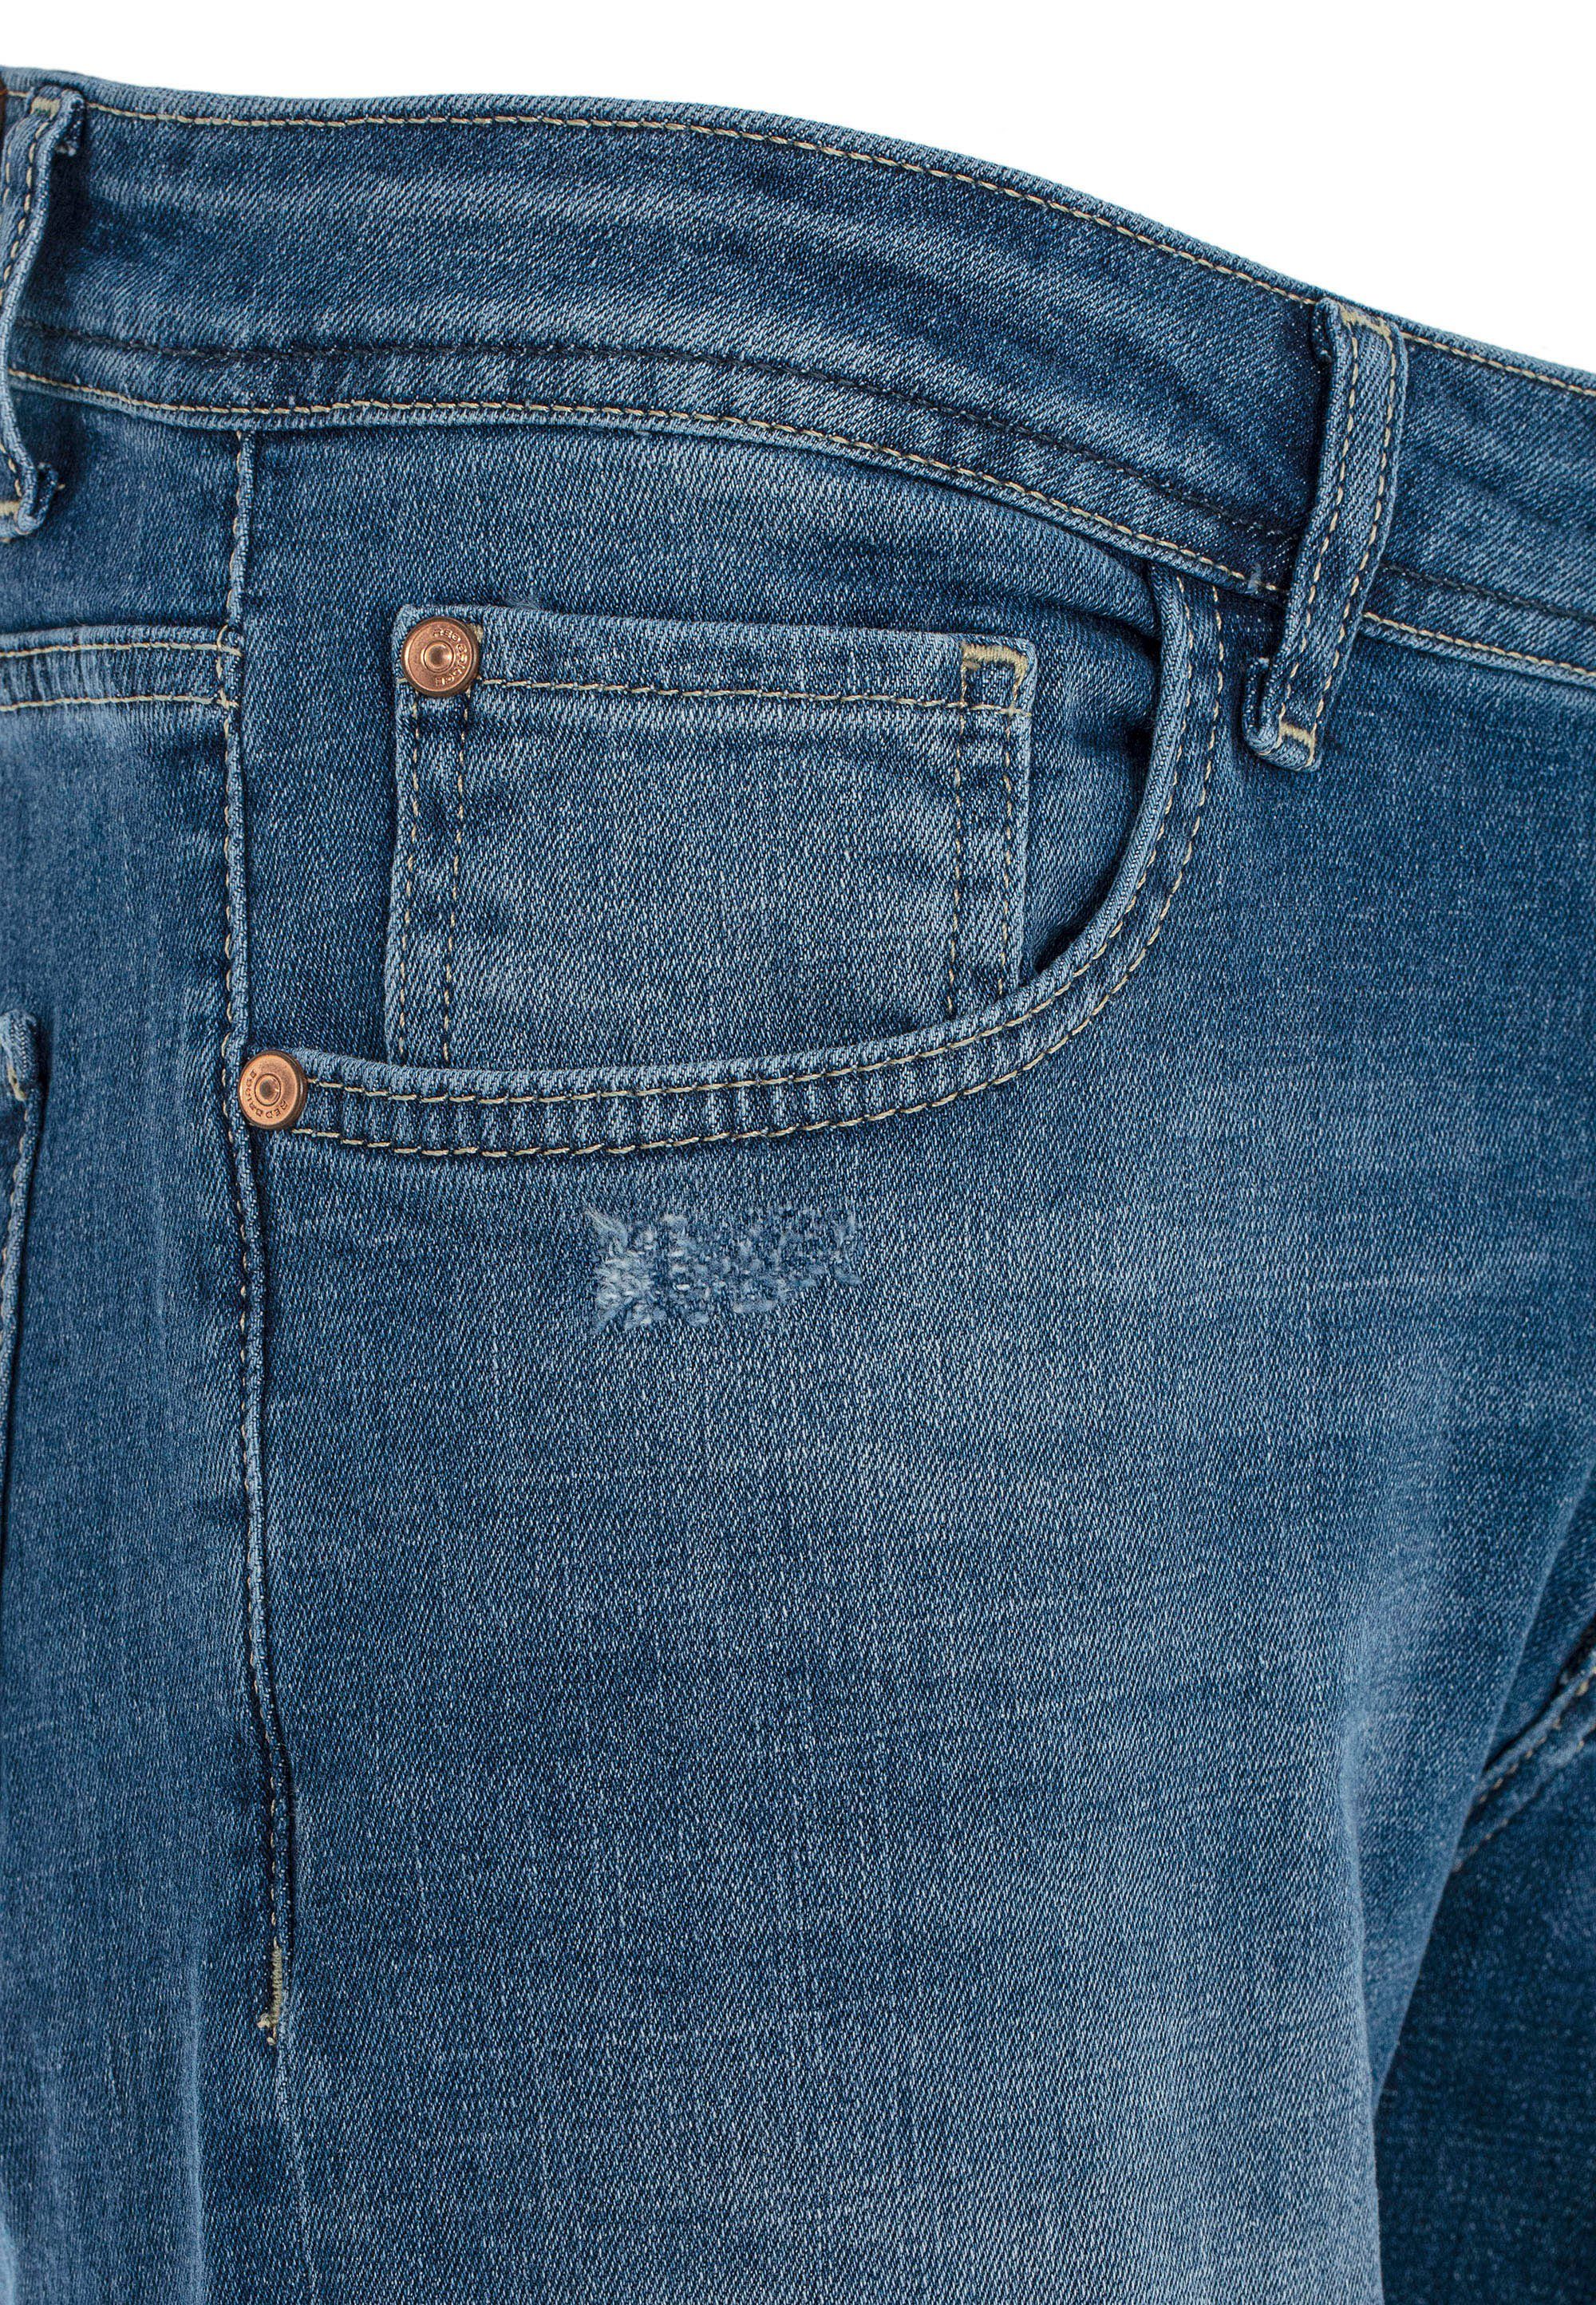 Waschung cooler mit RedBridge Slim-fit-Jeans Faded News Wave Newport